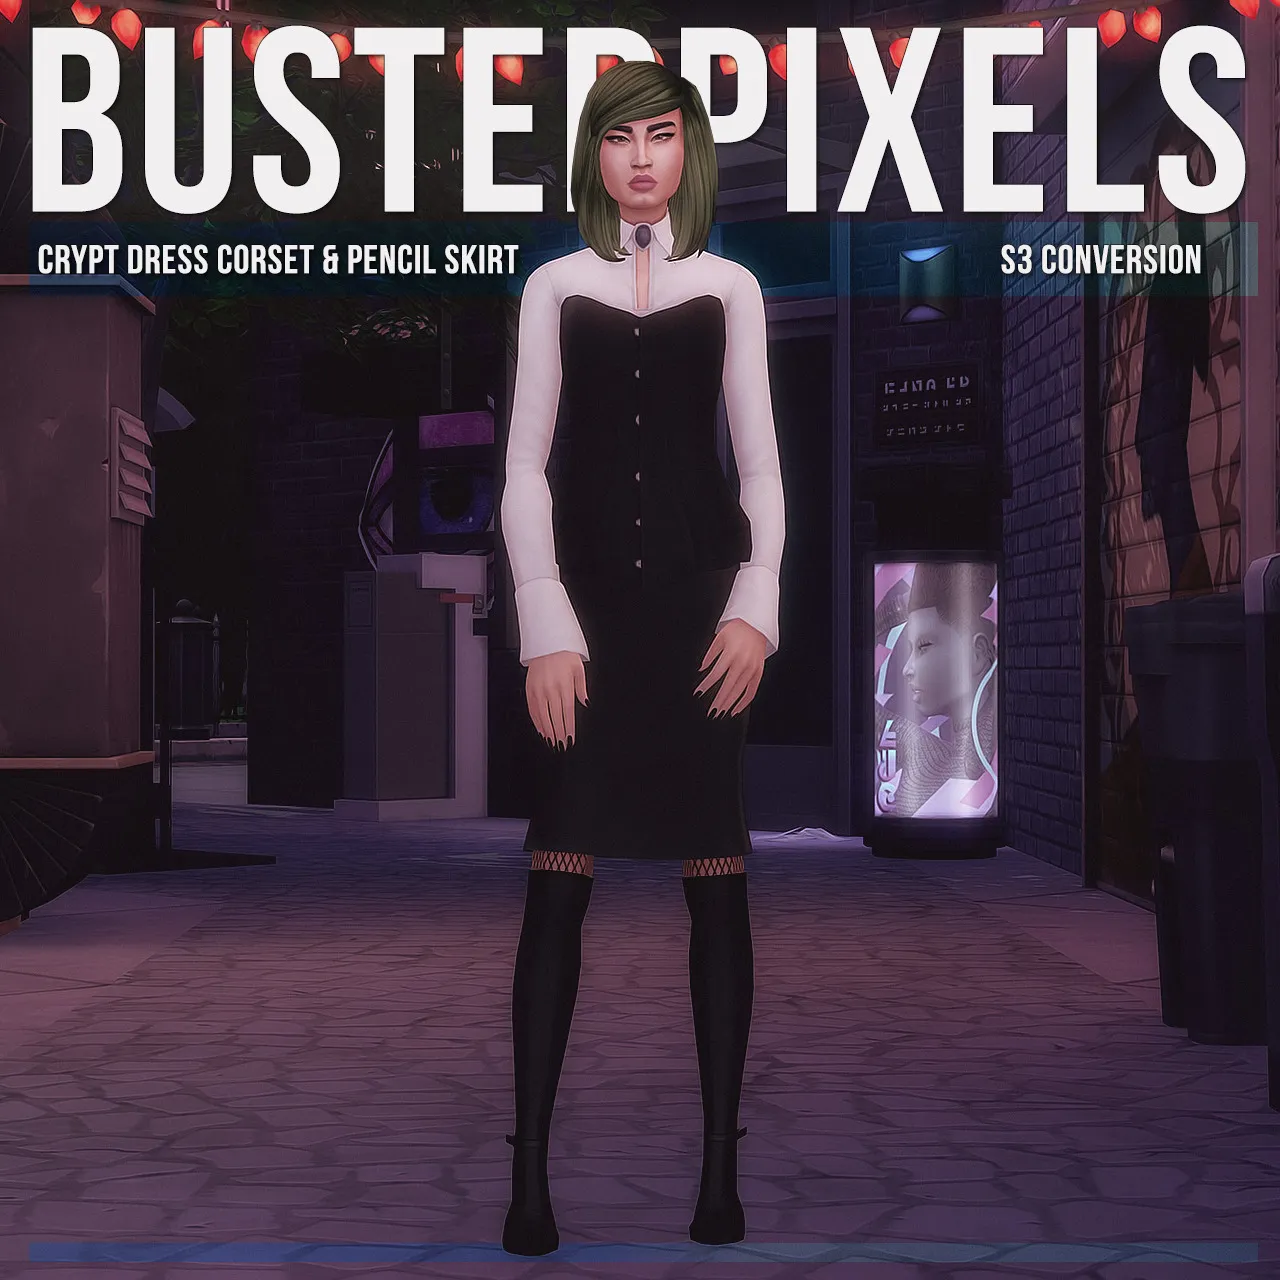 Crypt Dress Corset & Pencil Skirt S3 Conversion